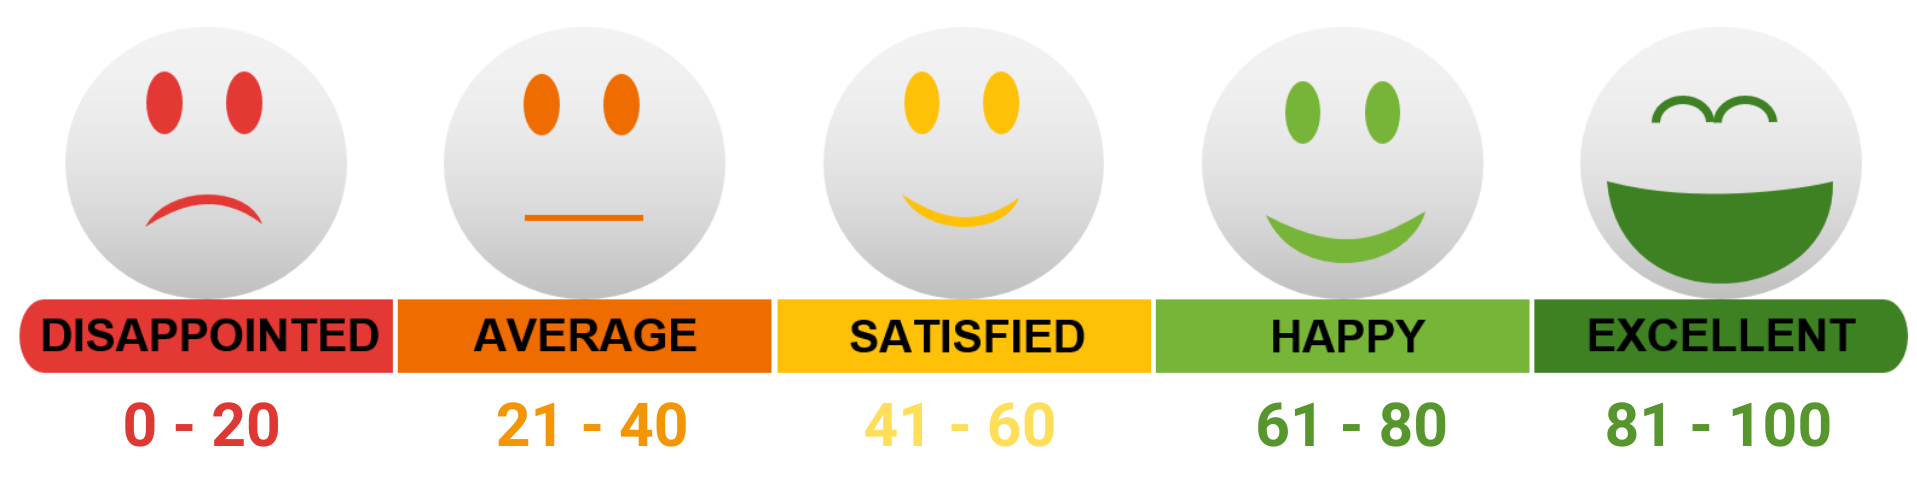 SentiMeter Score Ranges